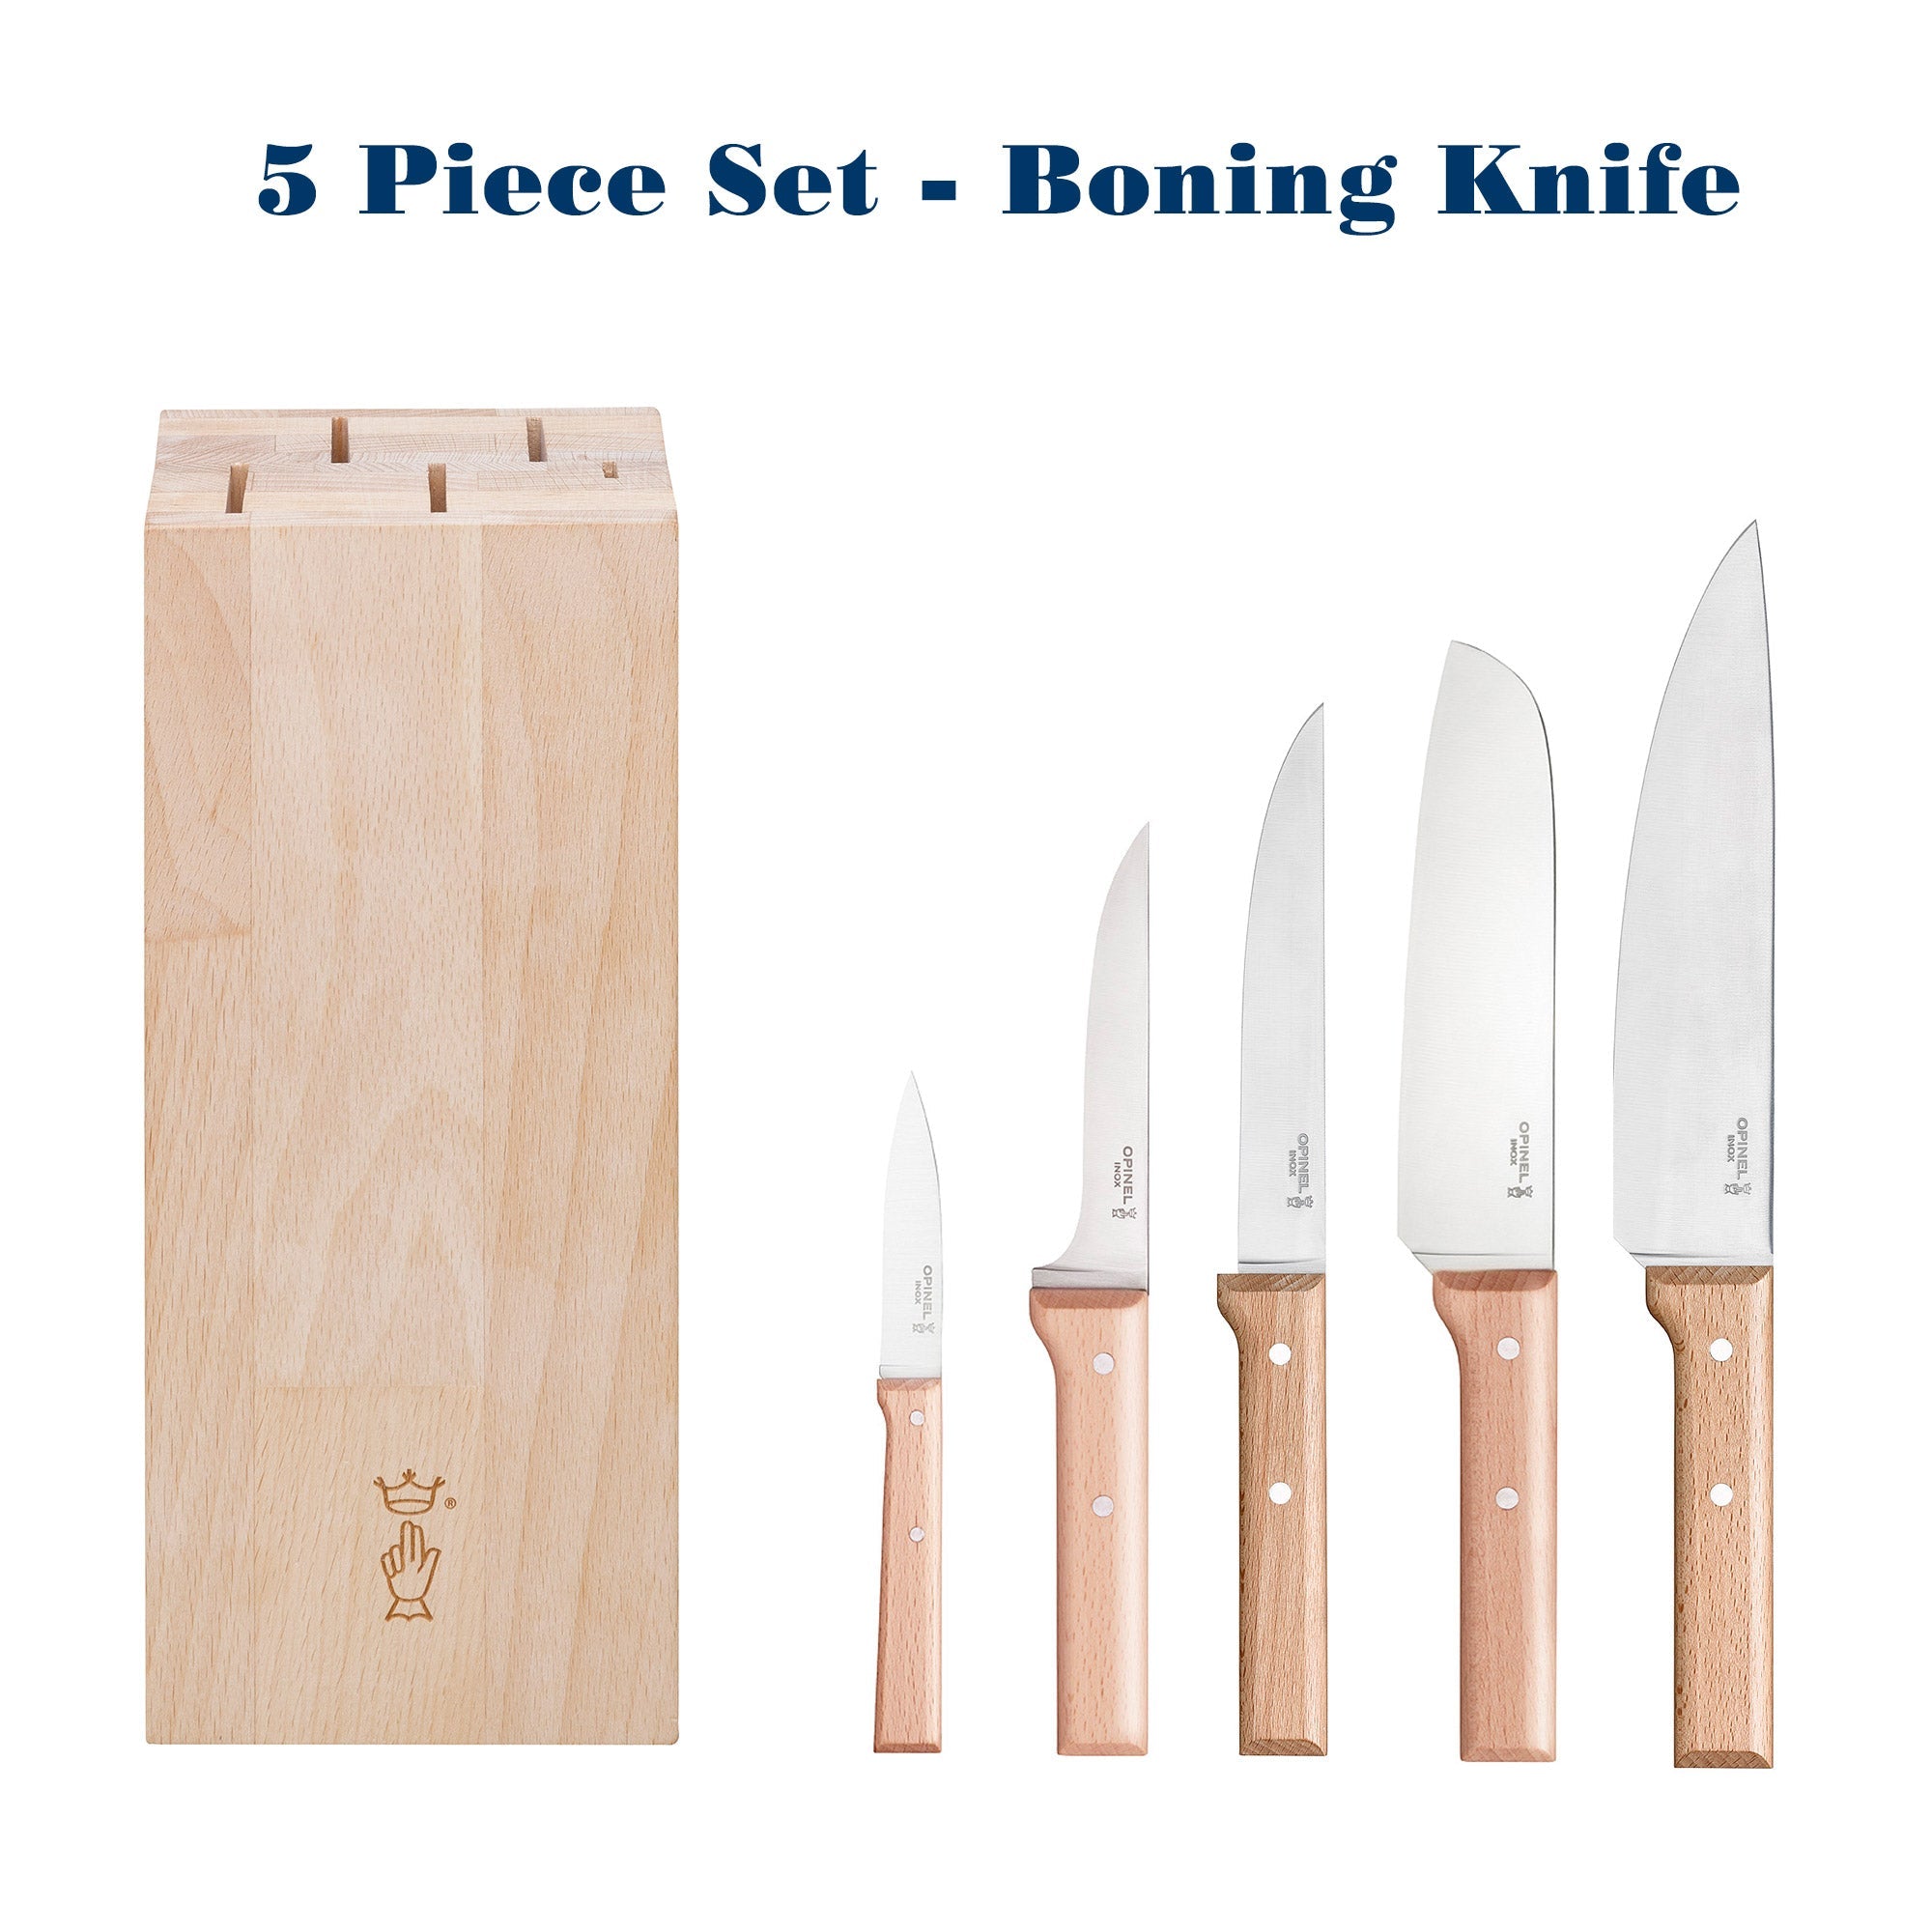 12 Piece Knife Block Set with Soft-Grip Ergonomic Handles, White